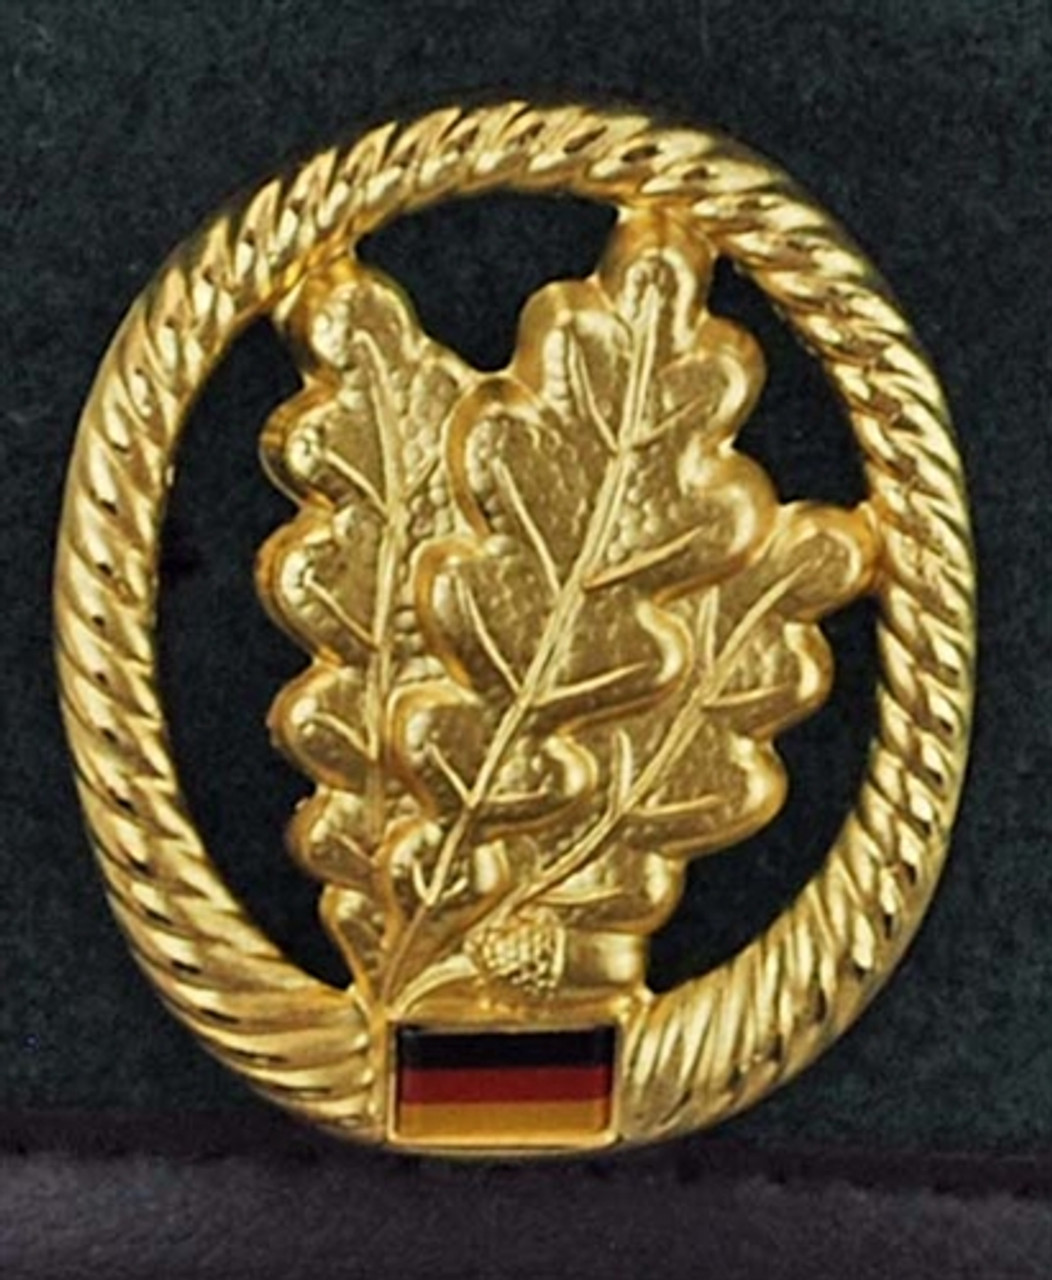 Bundeswehr Jägertruppe Beret from Hessen Antique